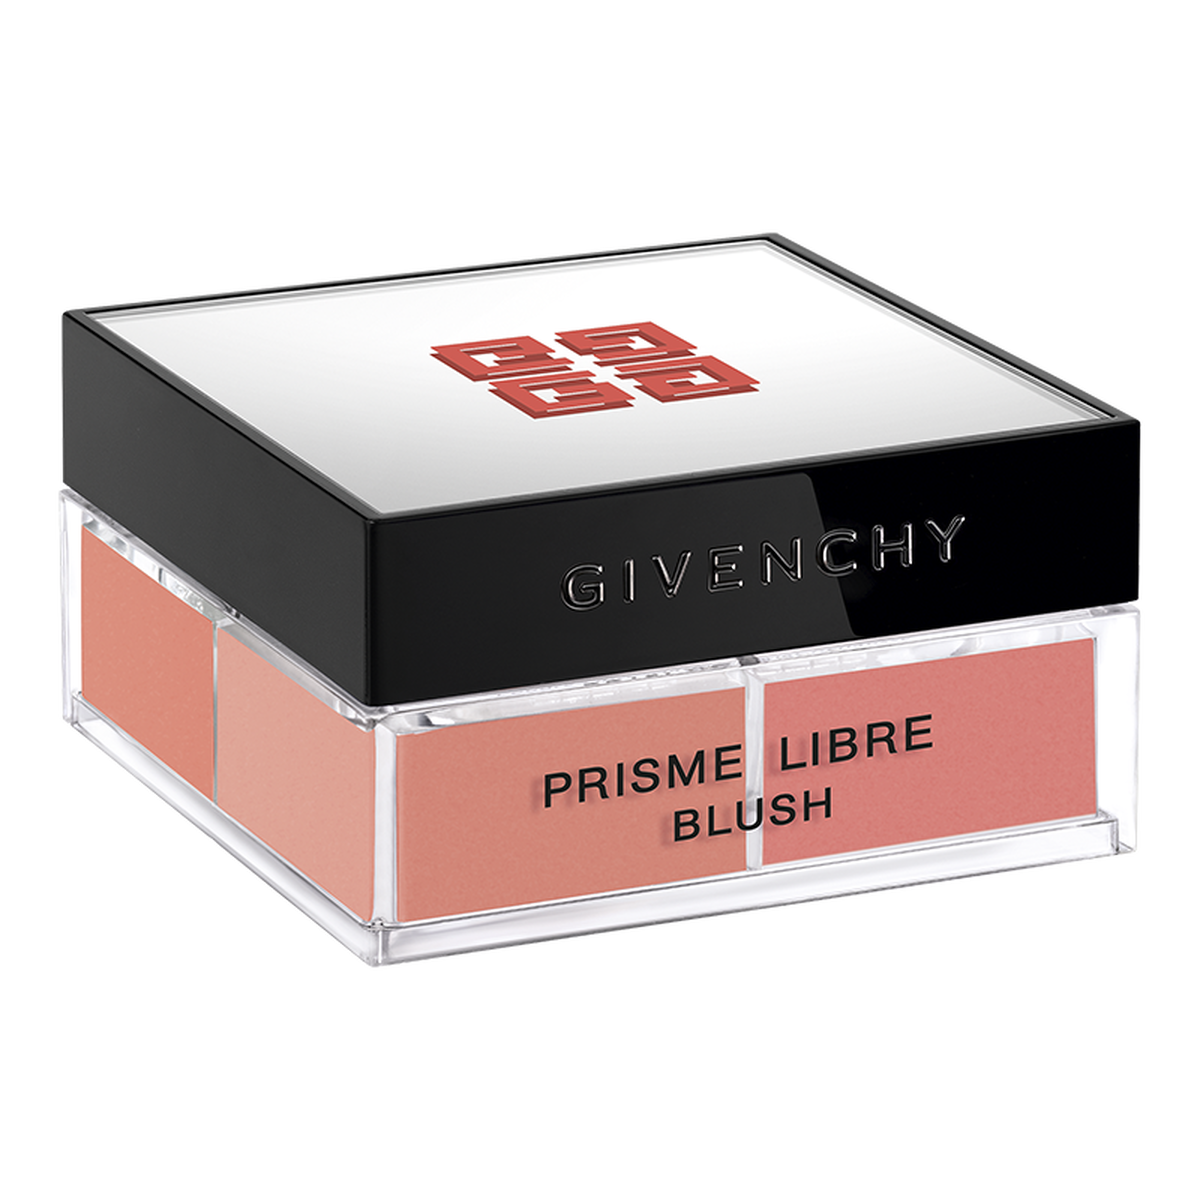 Blush 4 colours - Prisme Libre | Givenchy Beauty